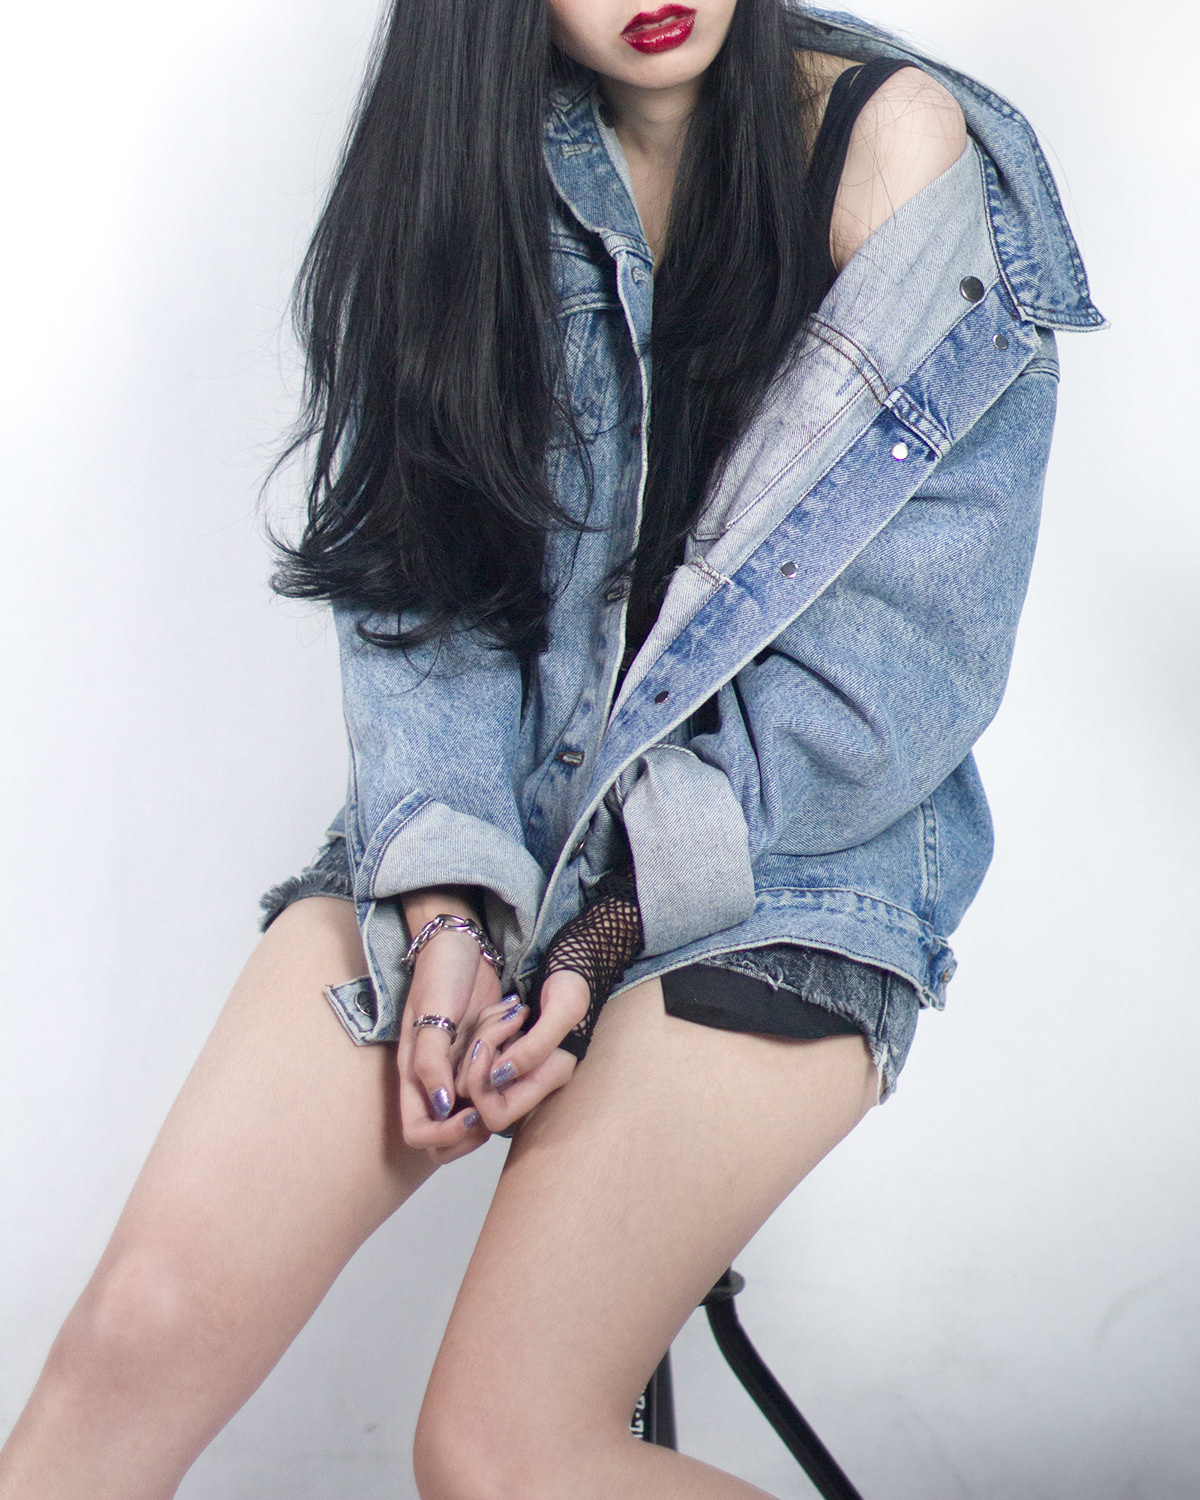 camden punk rock asian fashionphotography youth teenager